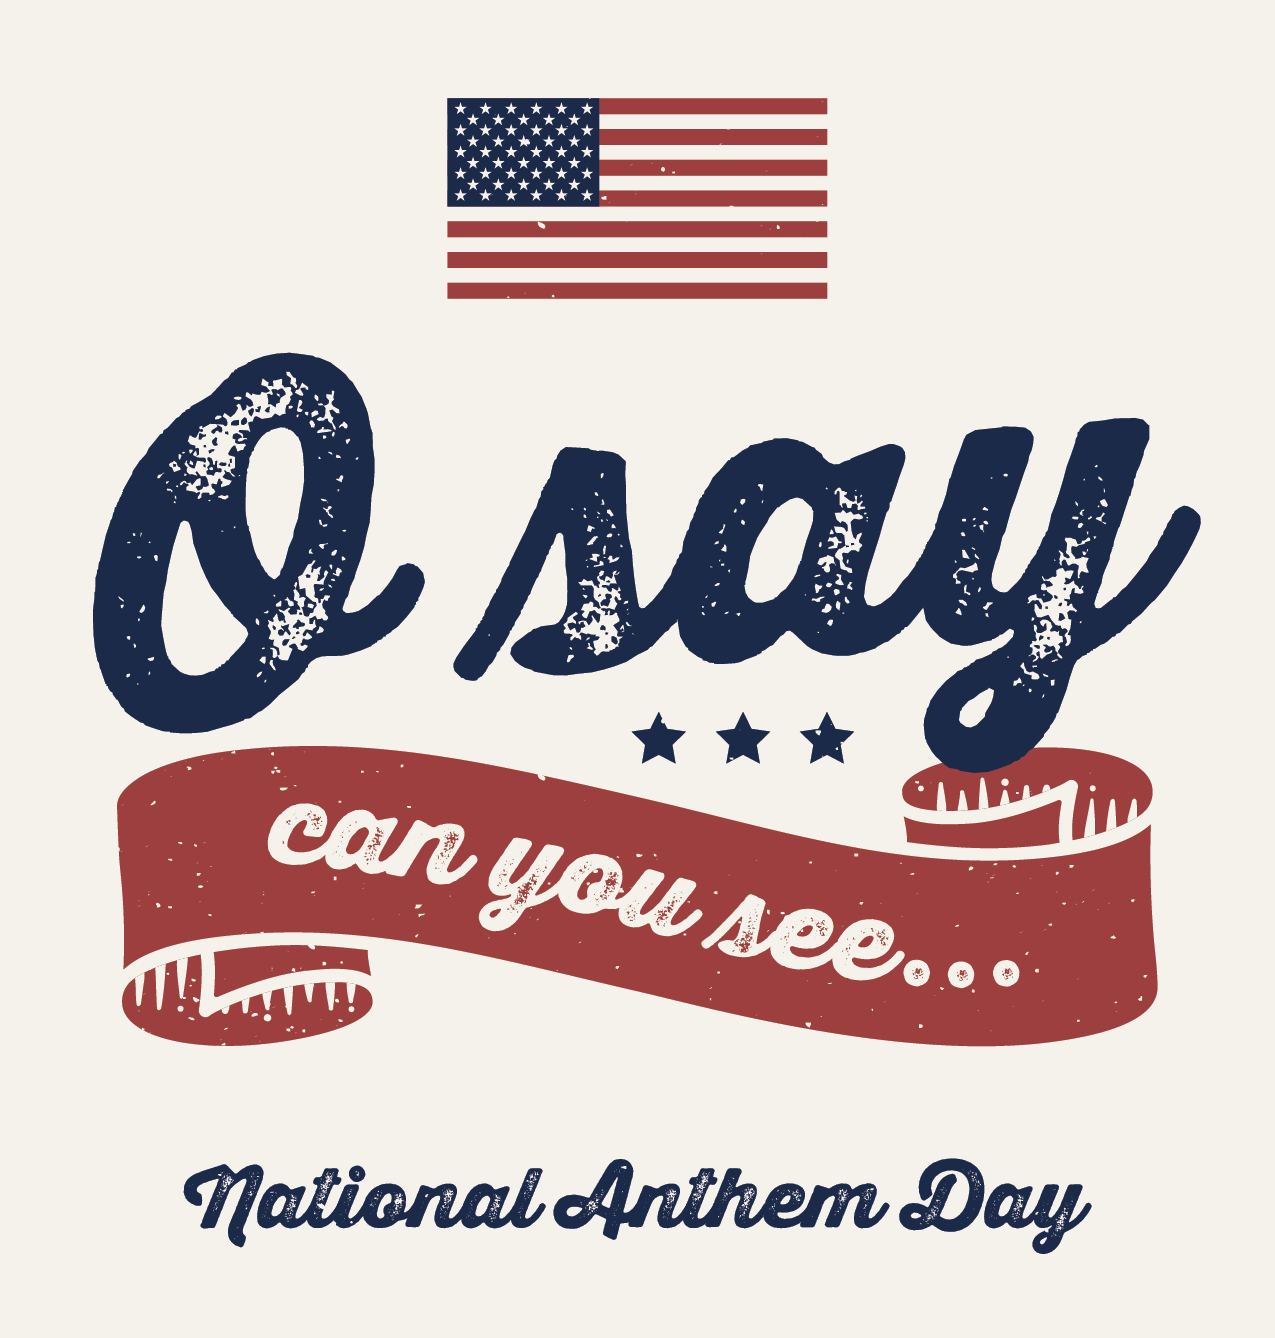 Happy National Anthem Day! Dave Severin